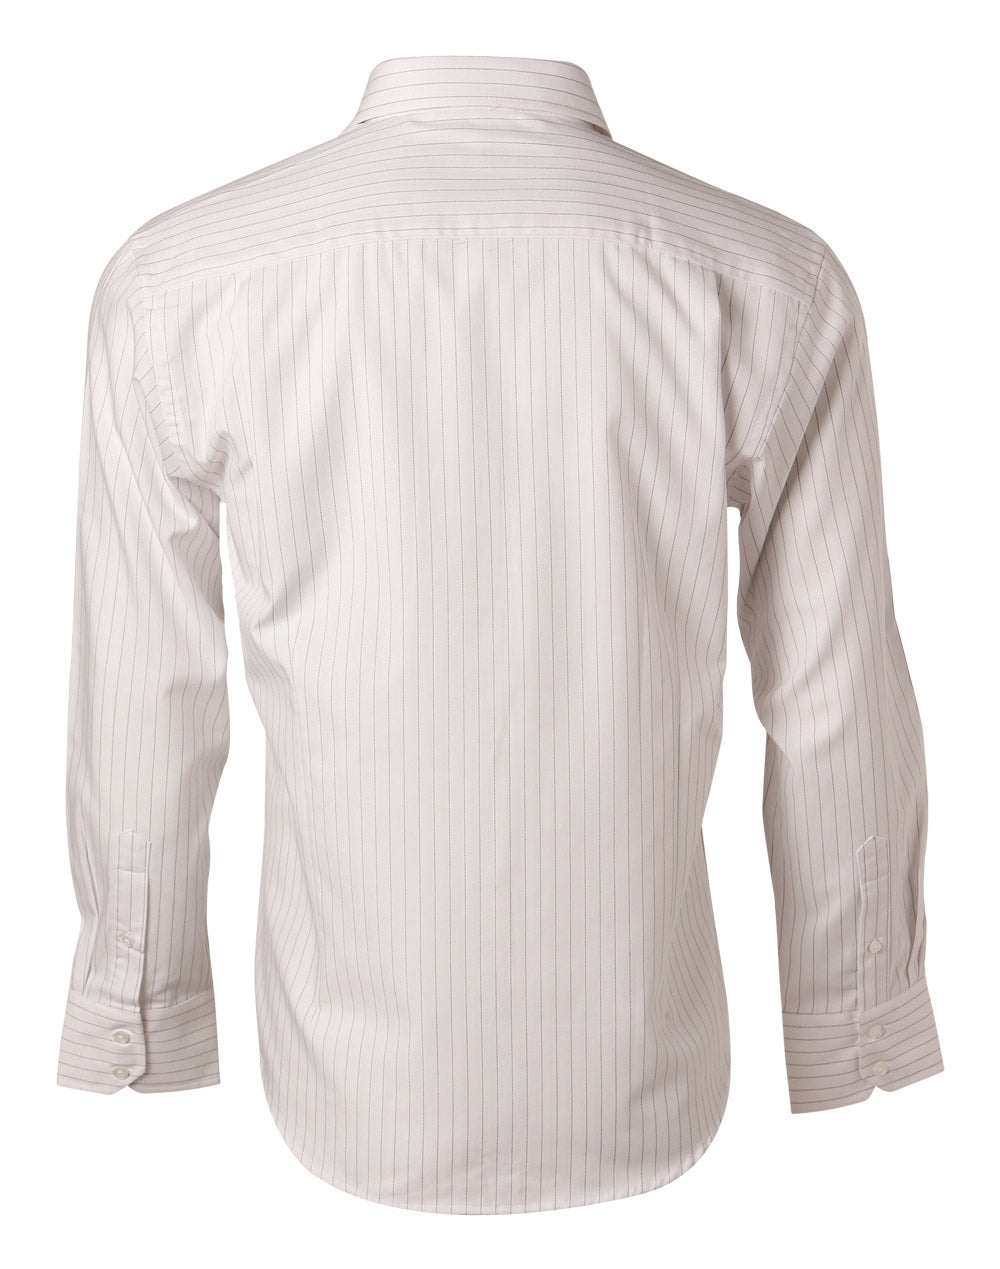 Winning Spirit -Men's Herringbone Pin Stripe Long Sleeve Shirt -BS17